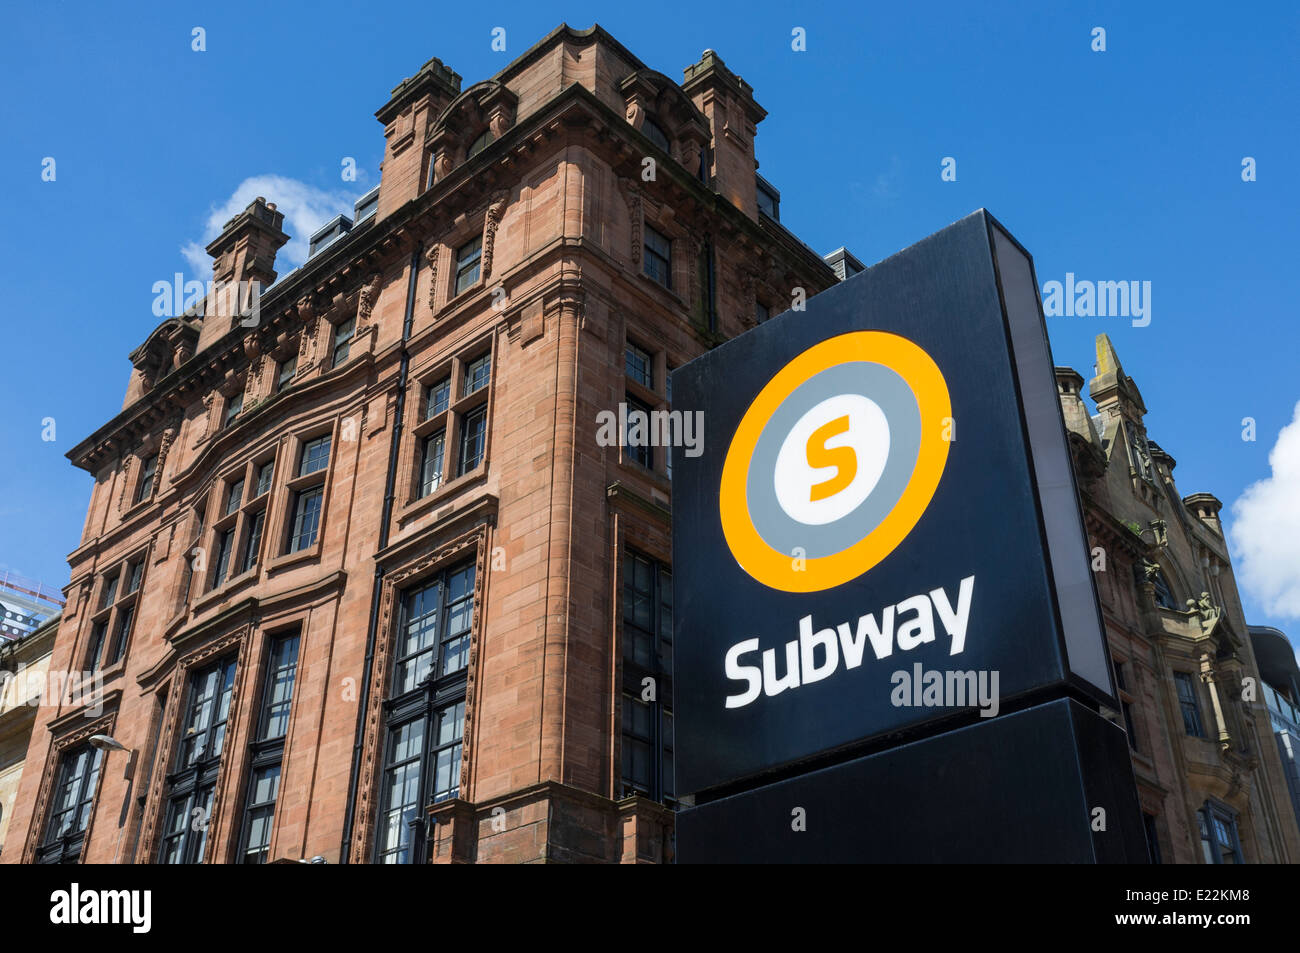 Subway sign at Buchanan Street Underground station, Buchanan Street, Glasgow, Scotland, UK Stock Photo